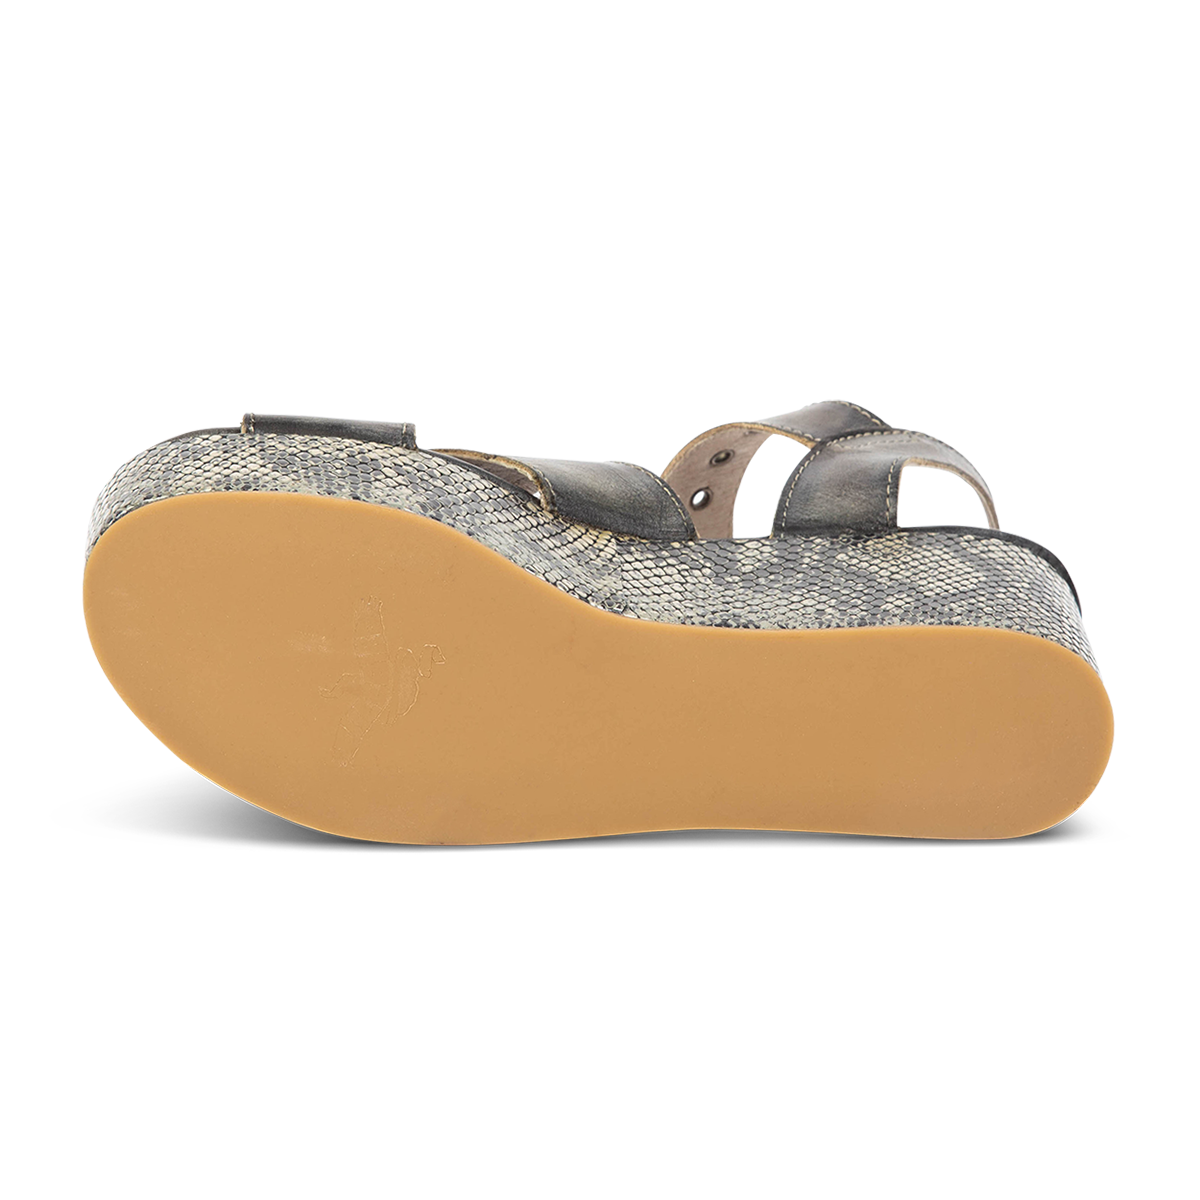 Rubber sole imprinted with FREEBIRD on women's Larae olive snake platform sandal